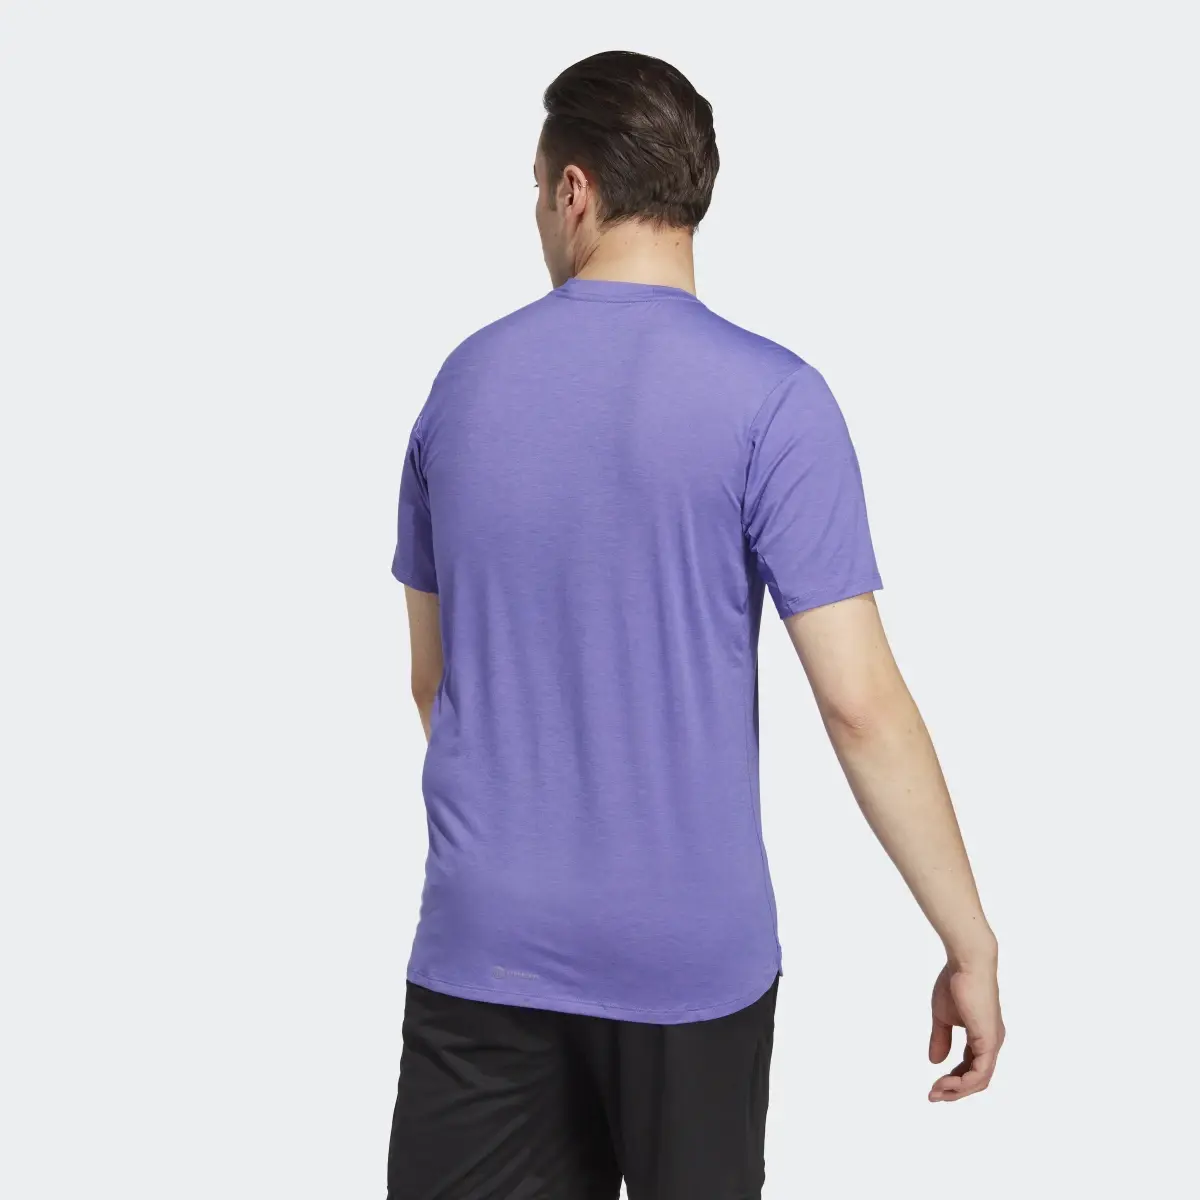 Adidas Designed for Training AEROREADY HIIT Colour-Shift Training T-Shirt. 3